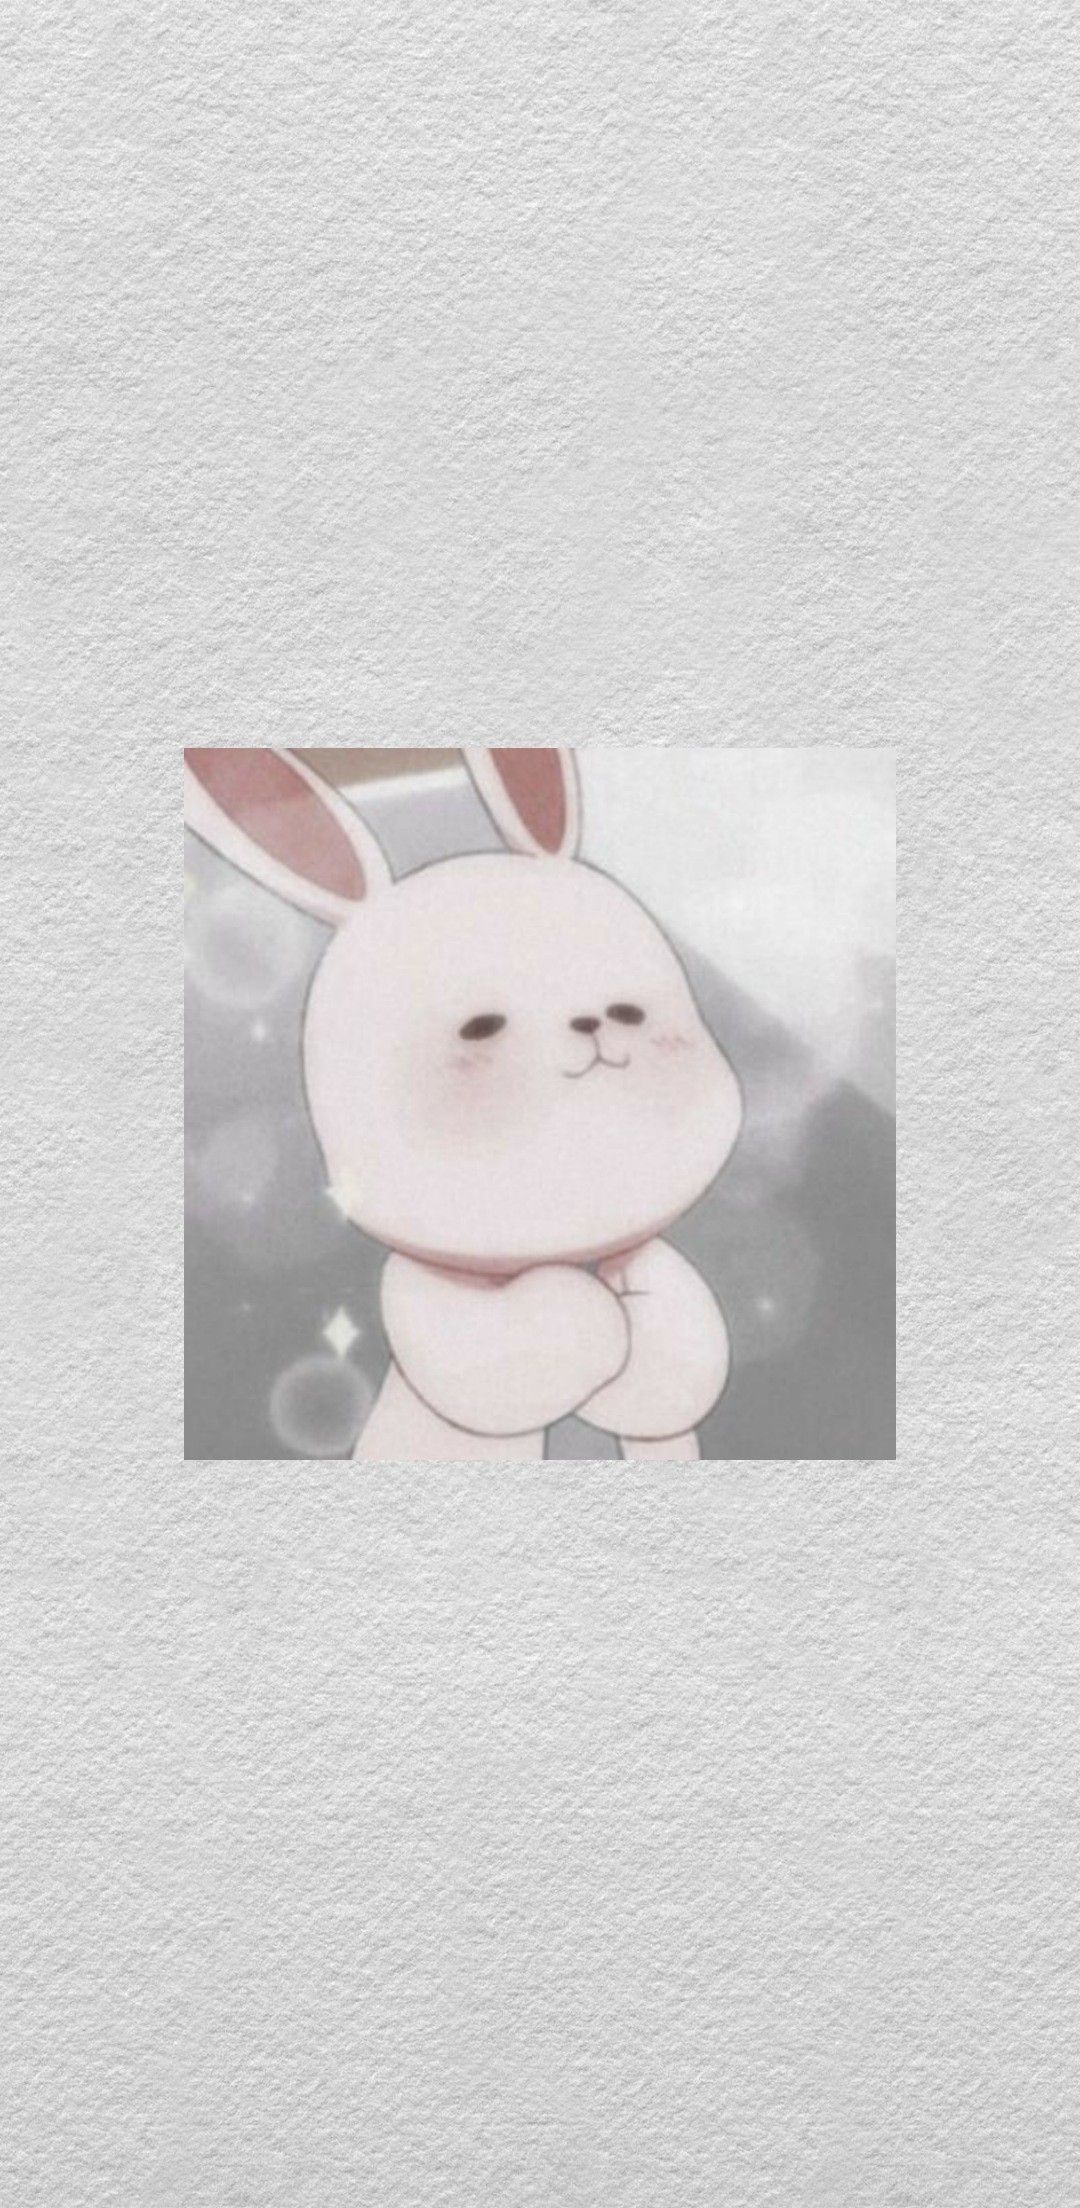  Kaninchen Hintergrundbild 1080x2208. White cute aesthetic cartoon bunny wallpaper for iPhone and Android. Bunny wallpaper, Rabbit wallpaper, Cute anime wallpaper